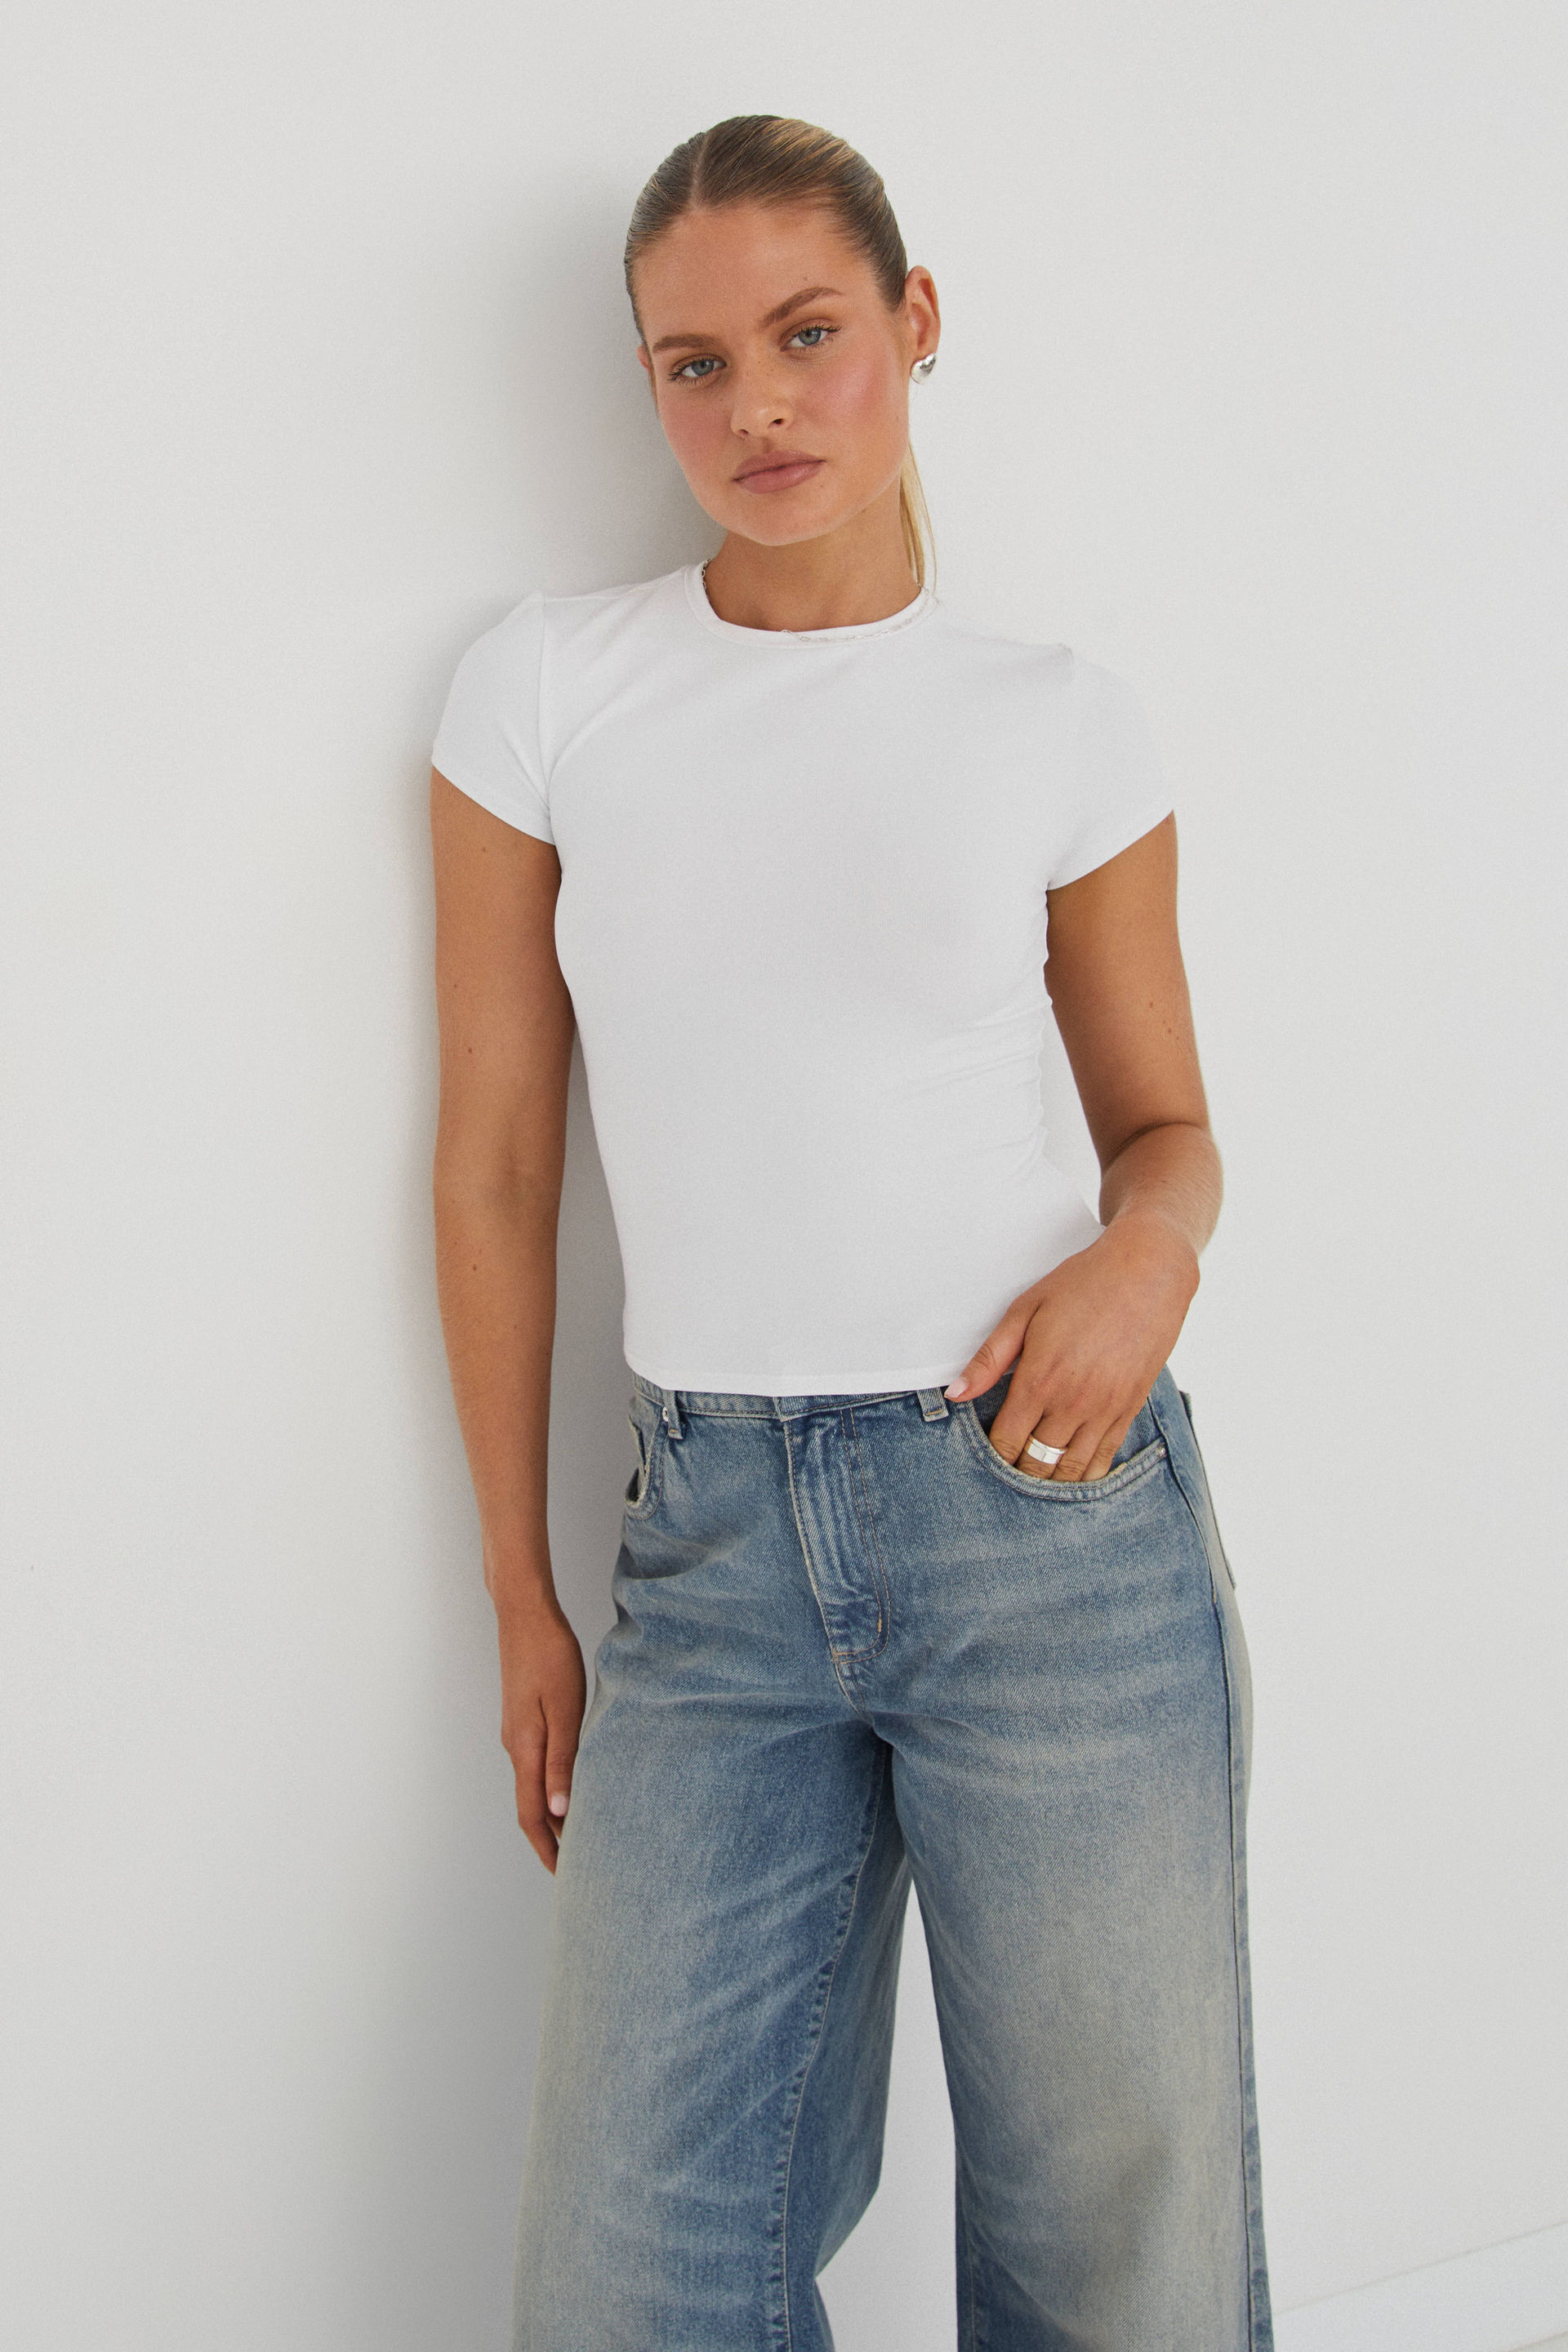 discount 98% Sfera blouse White S WOMEN FASHION Shirts & T-shirts Combined 